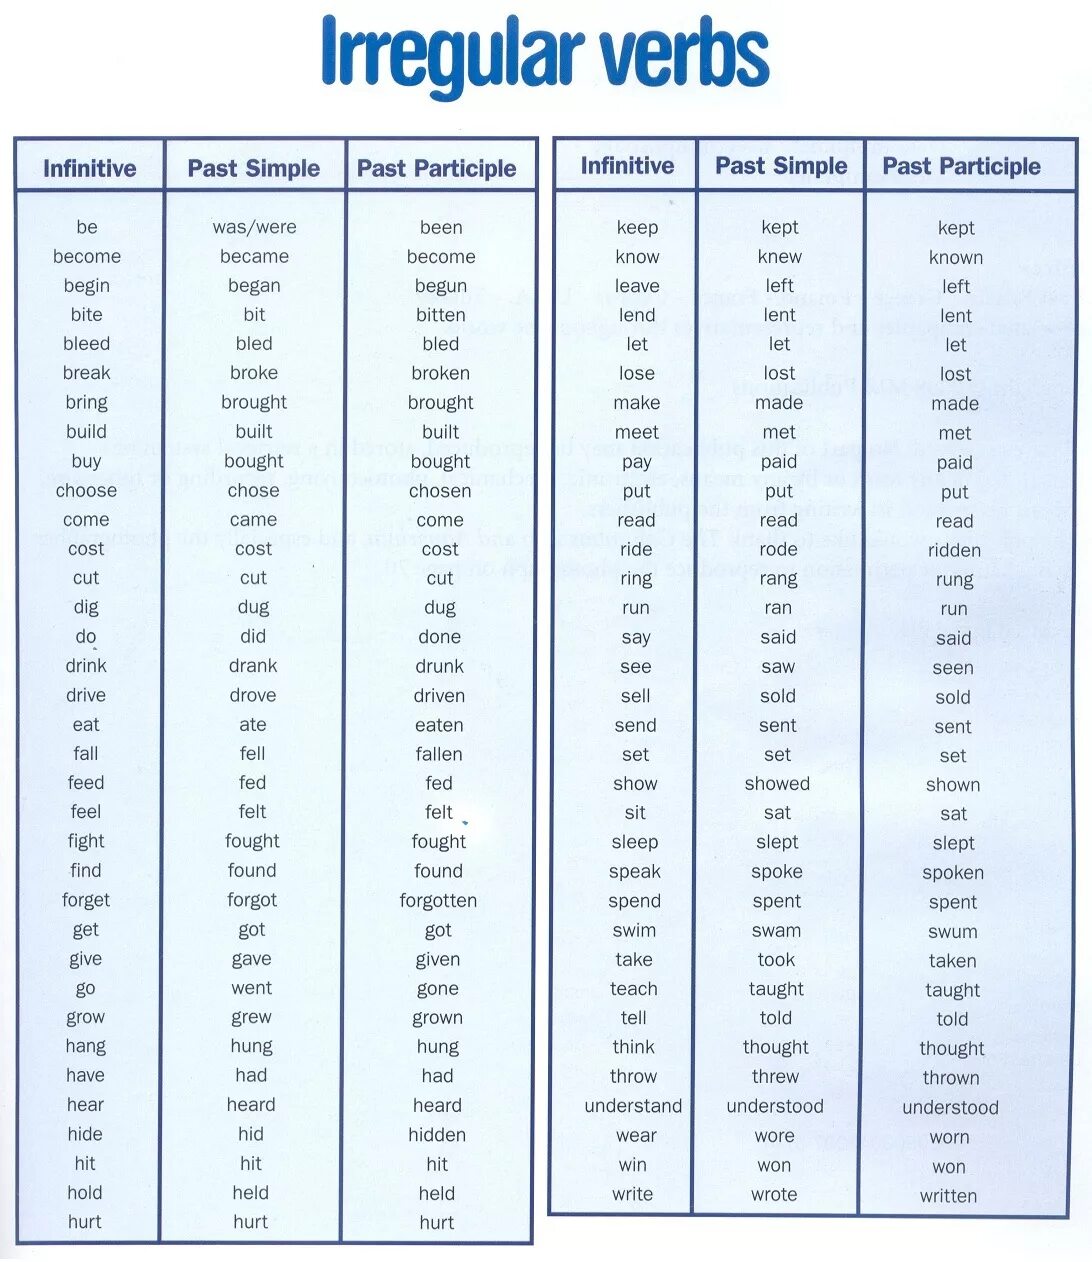 Read третья форма. Past simple Irregular verbs таблица. Past simple таблица неправильных глаголов. Past participle неправильные глаголы. Неправильные глаголы английского Irregular verbs.